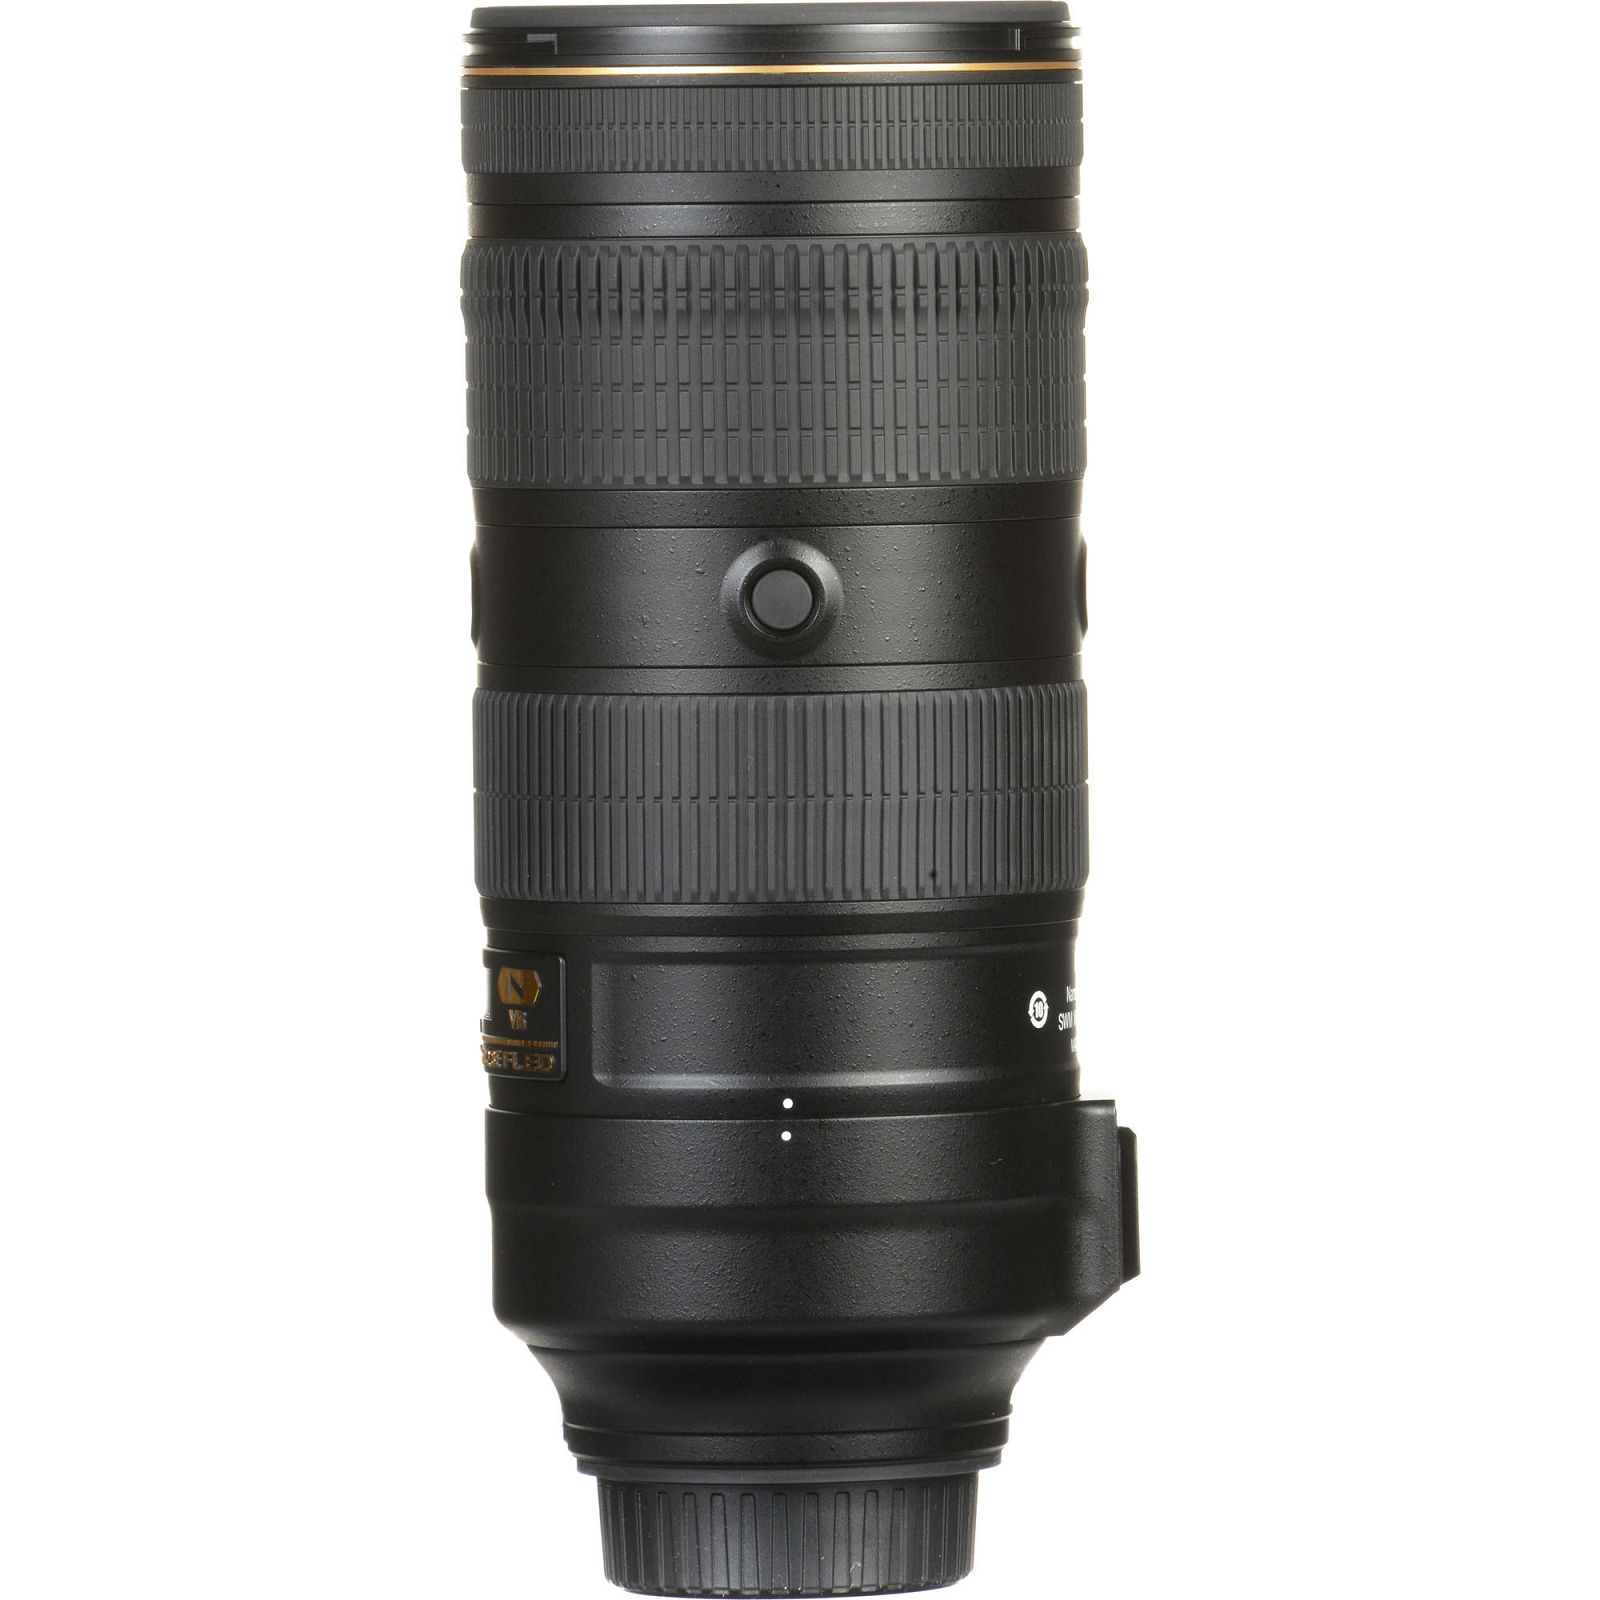 Nikon AF-S 70-200mm f/2.8E FL ED VR FX telefoto objektiv Nikkor auto focus zoom lens 70-200 2.8 (JAA830DA)